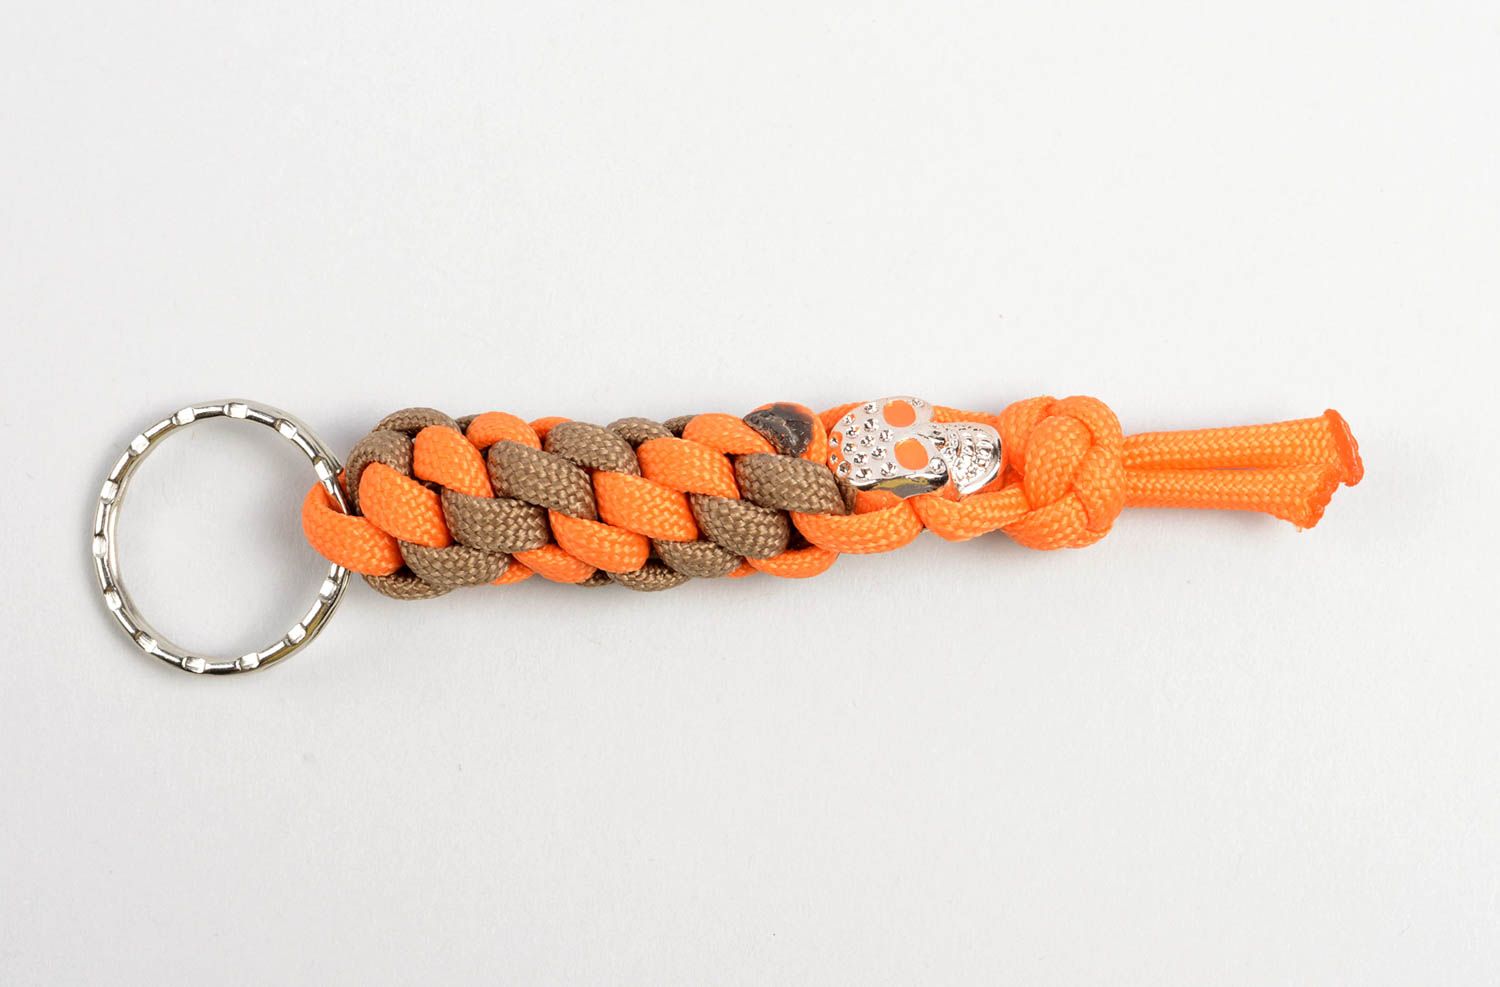 Unusual handmade cord keychain best keychain design cool keyrings gift ideas photo 4